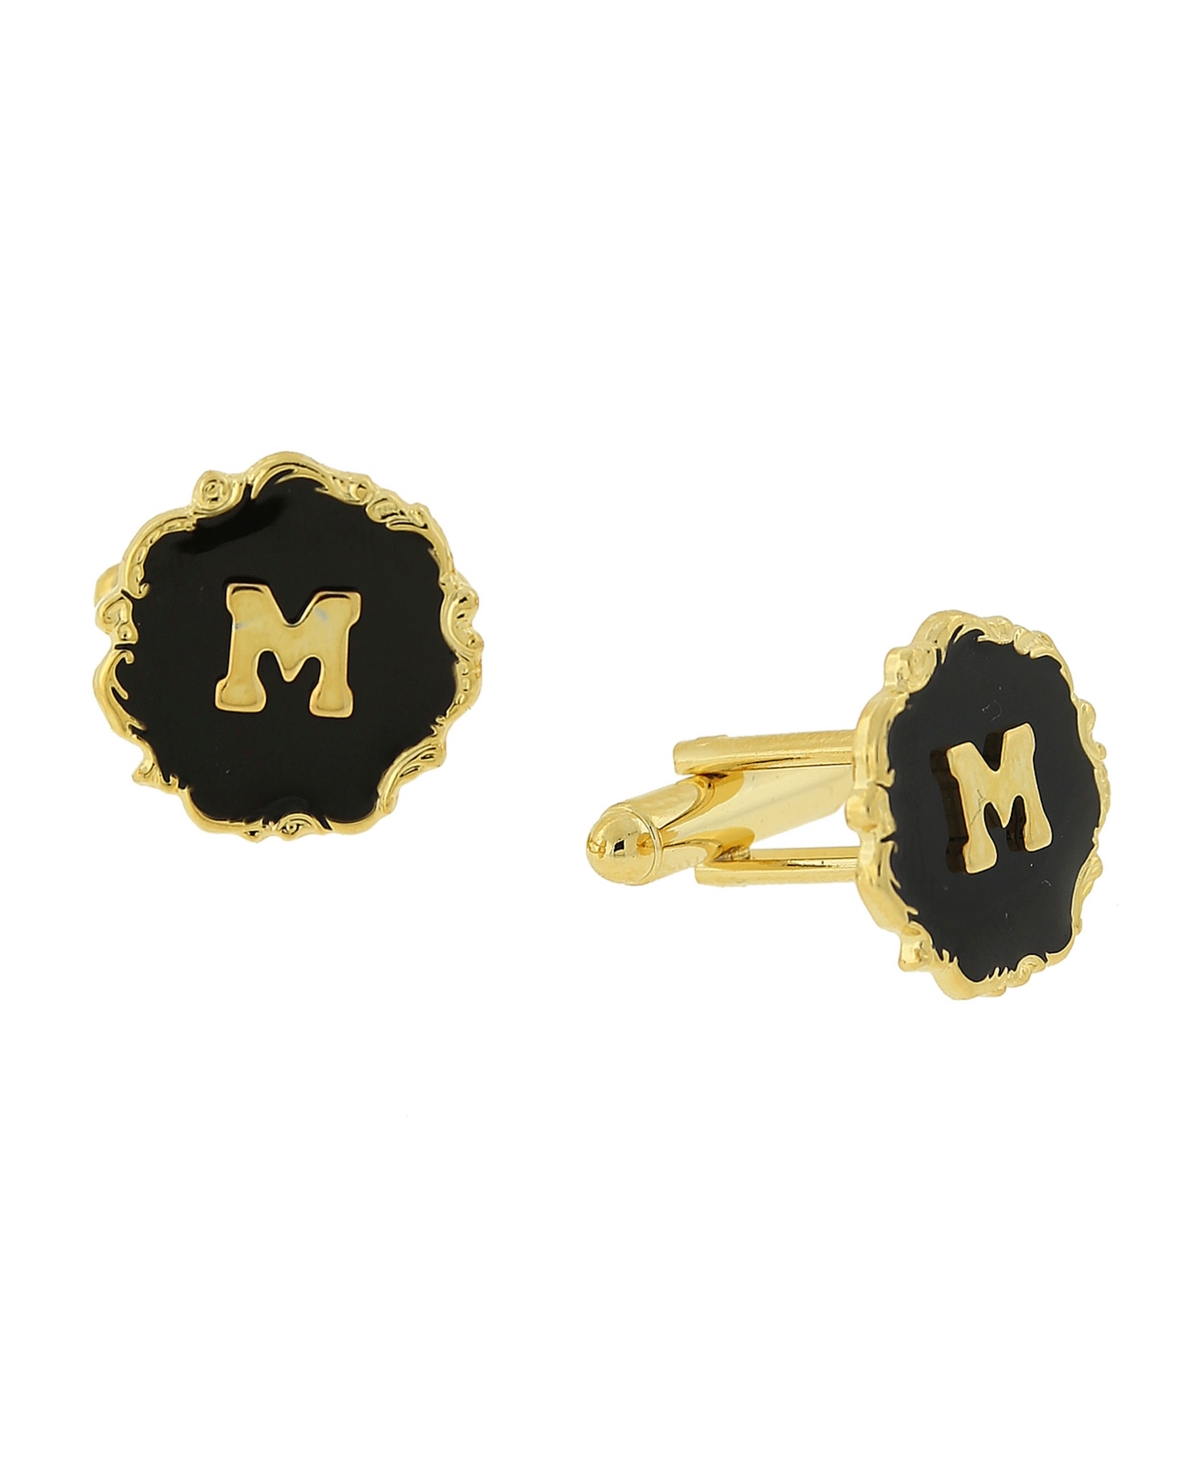 1928 Jewelry 14k Gold-plated Enamel Initial M Cufflinks In Black